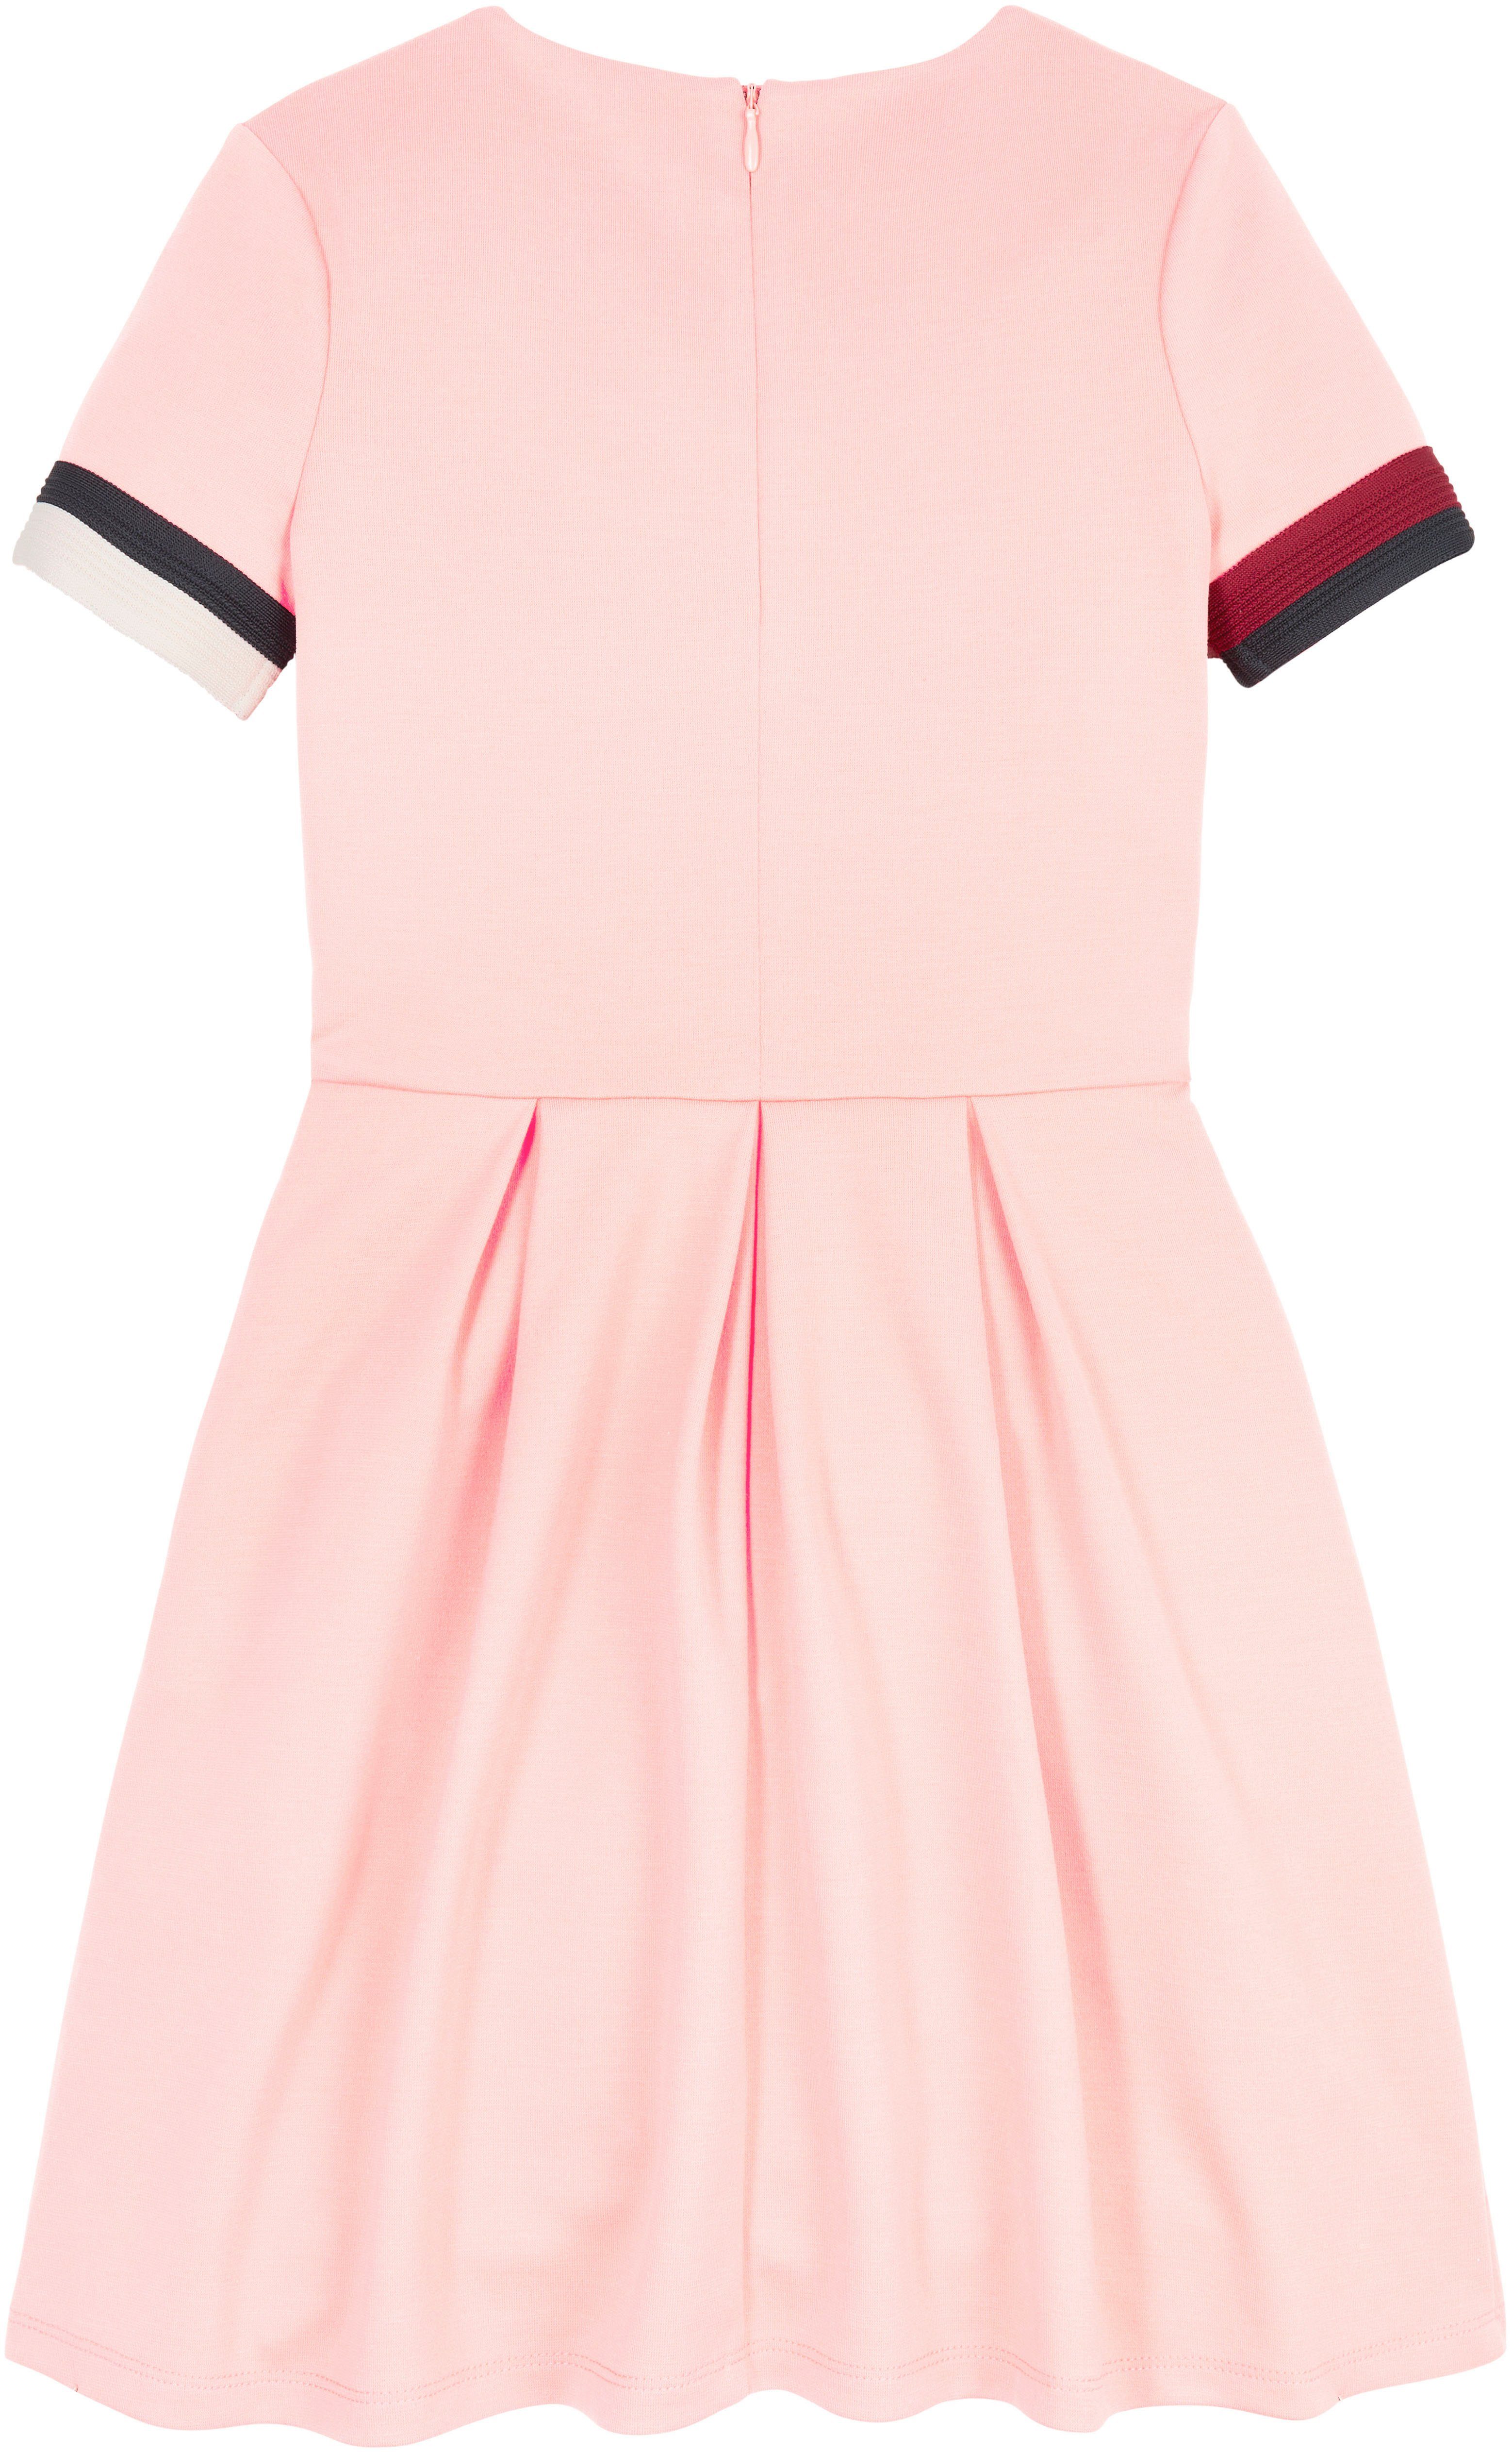 Mädchen Blusenkleid STRIPE Hilfiger Kids Junior PUNTO Tommy Kinder MiniMe,für Pink DRESS GLOBAL Crystal